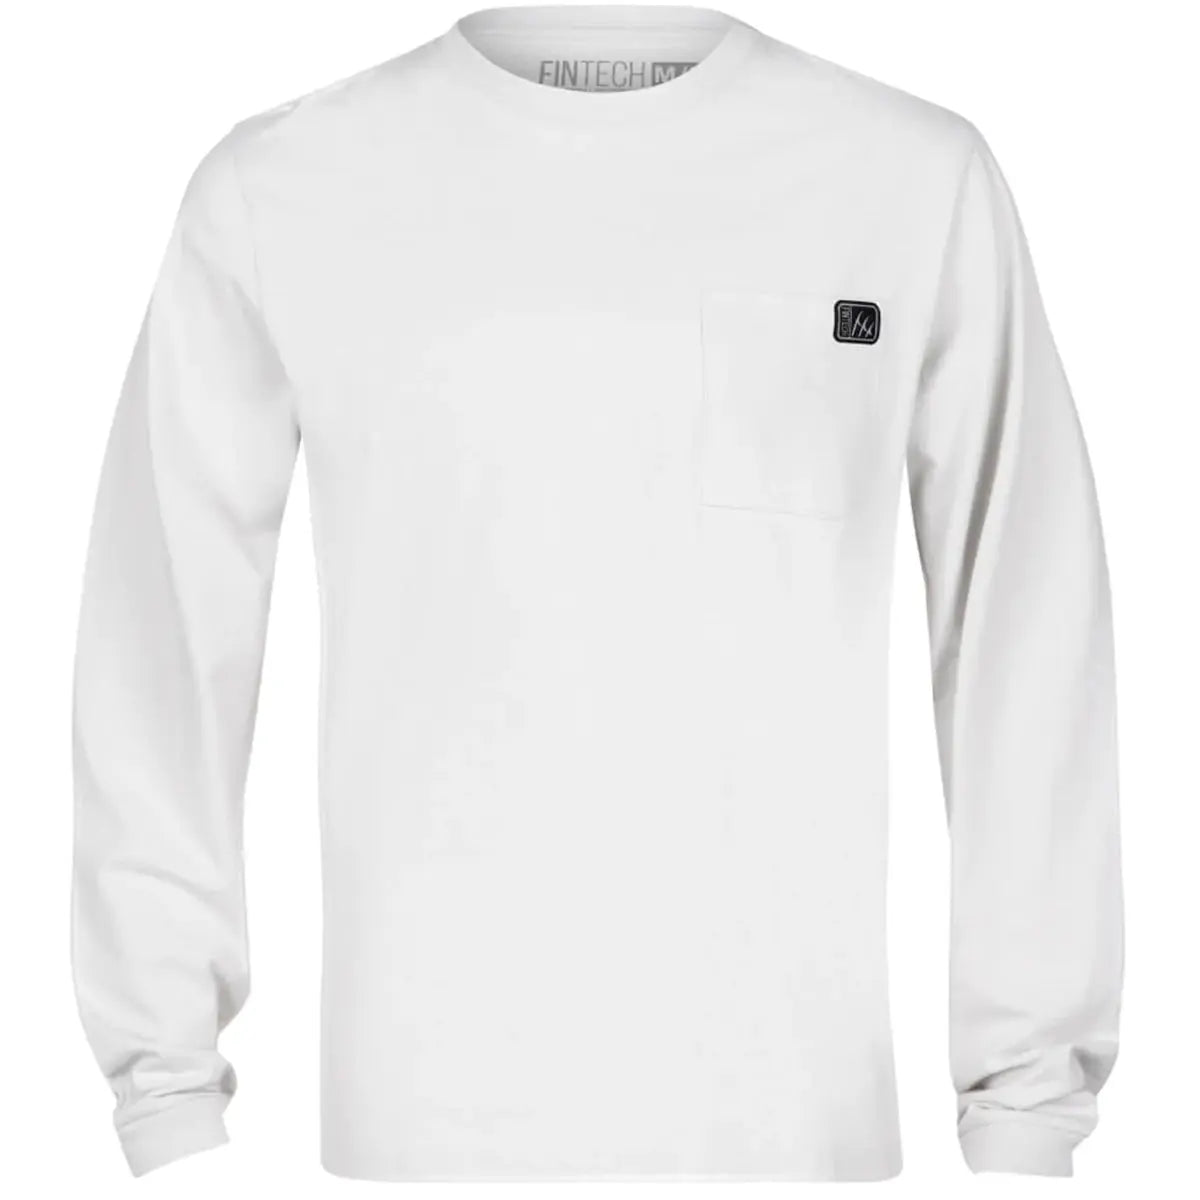 Fintech FPF Rising Heavy-Duty Long Sleeve Graphic T-Shirt - Glacier Gray Fintech